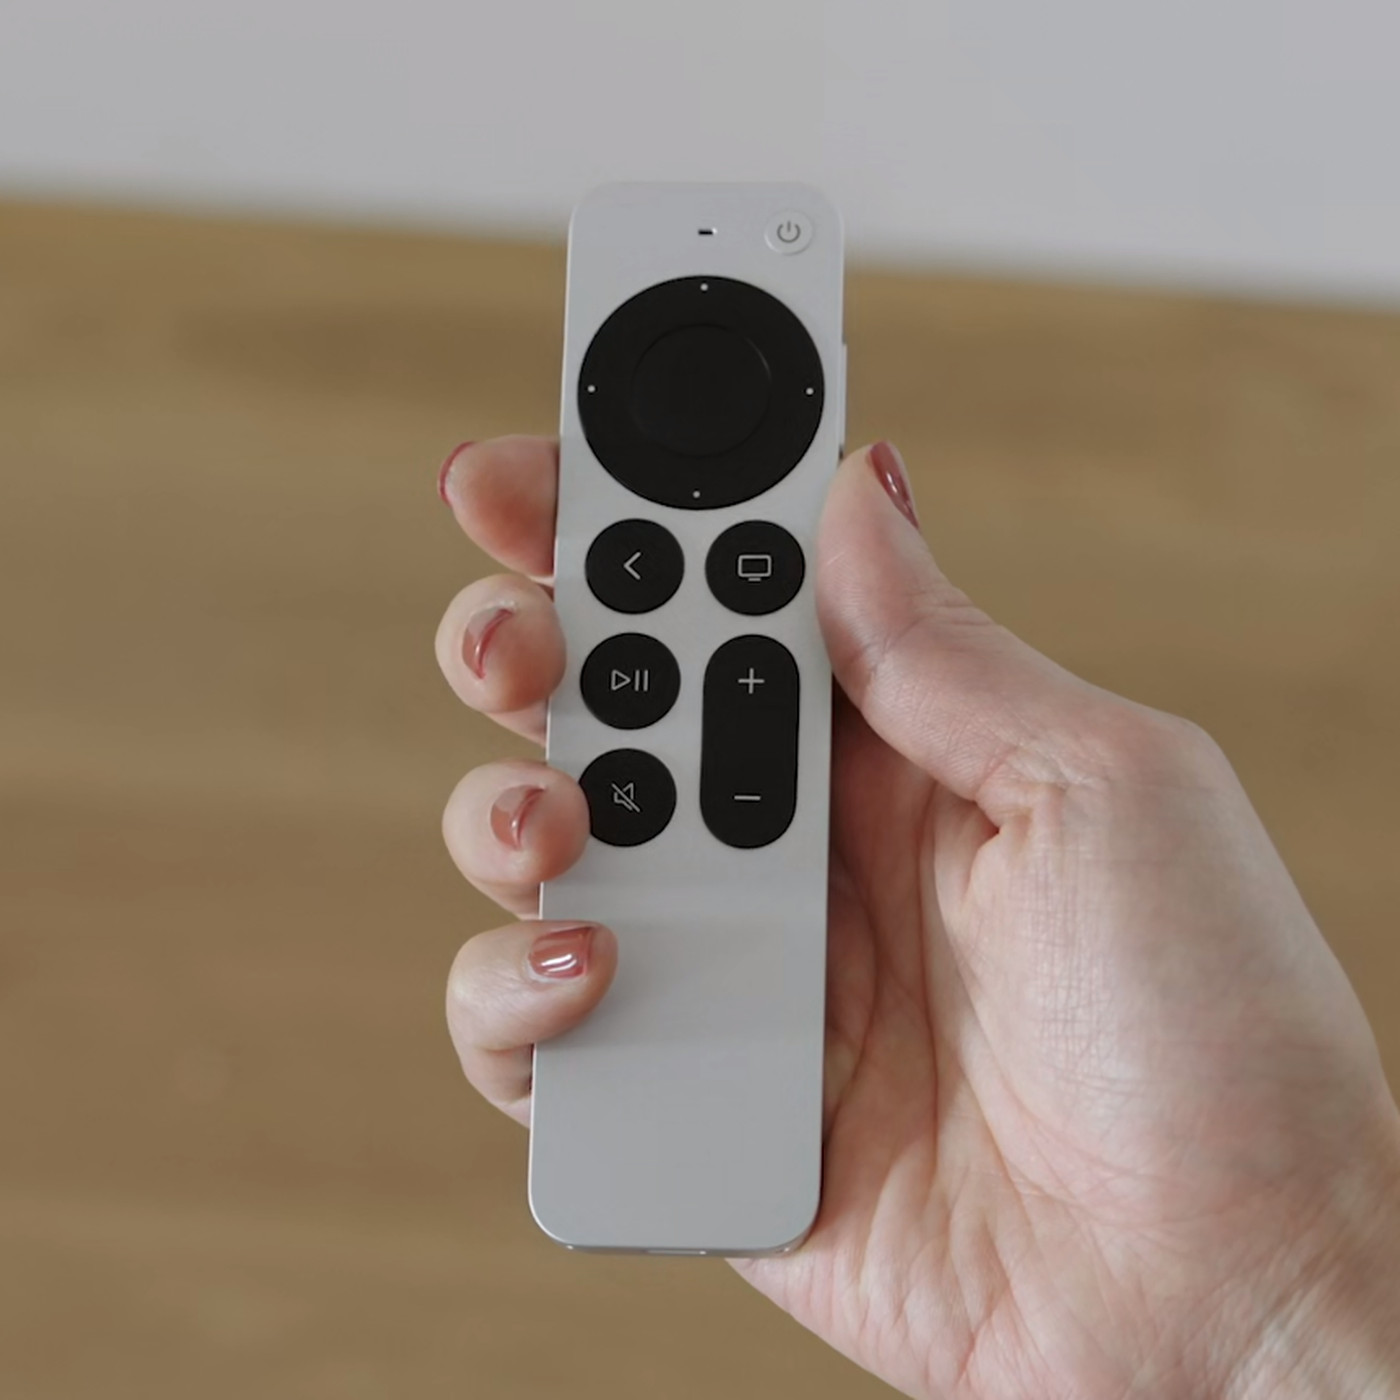 Basura edificio Abolladura Apple unveils a redesigned remote for its new Apple TV 4K - The Verge